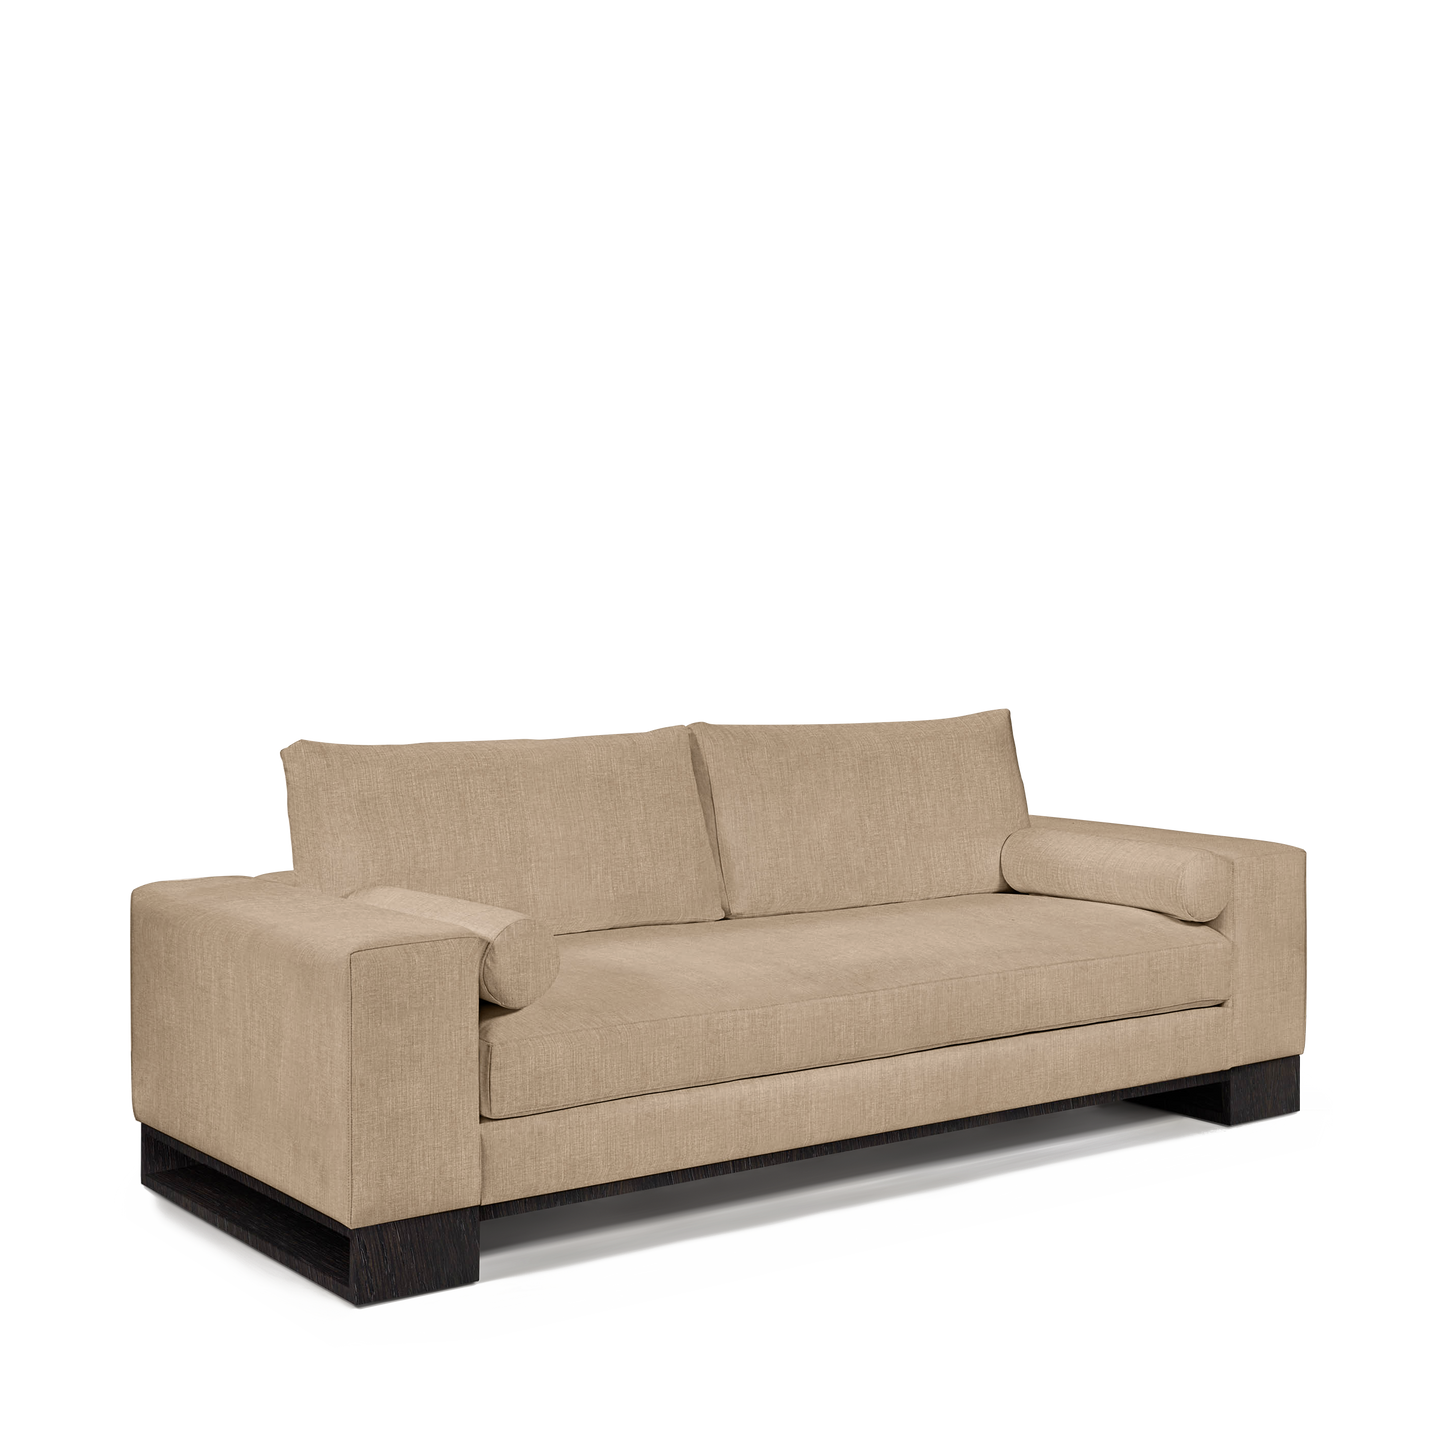 TERRA 2,5-seater sofa with khaki textile and chocolate wood legs 